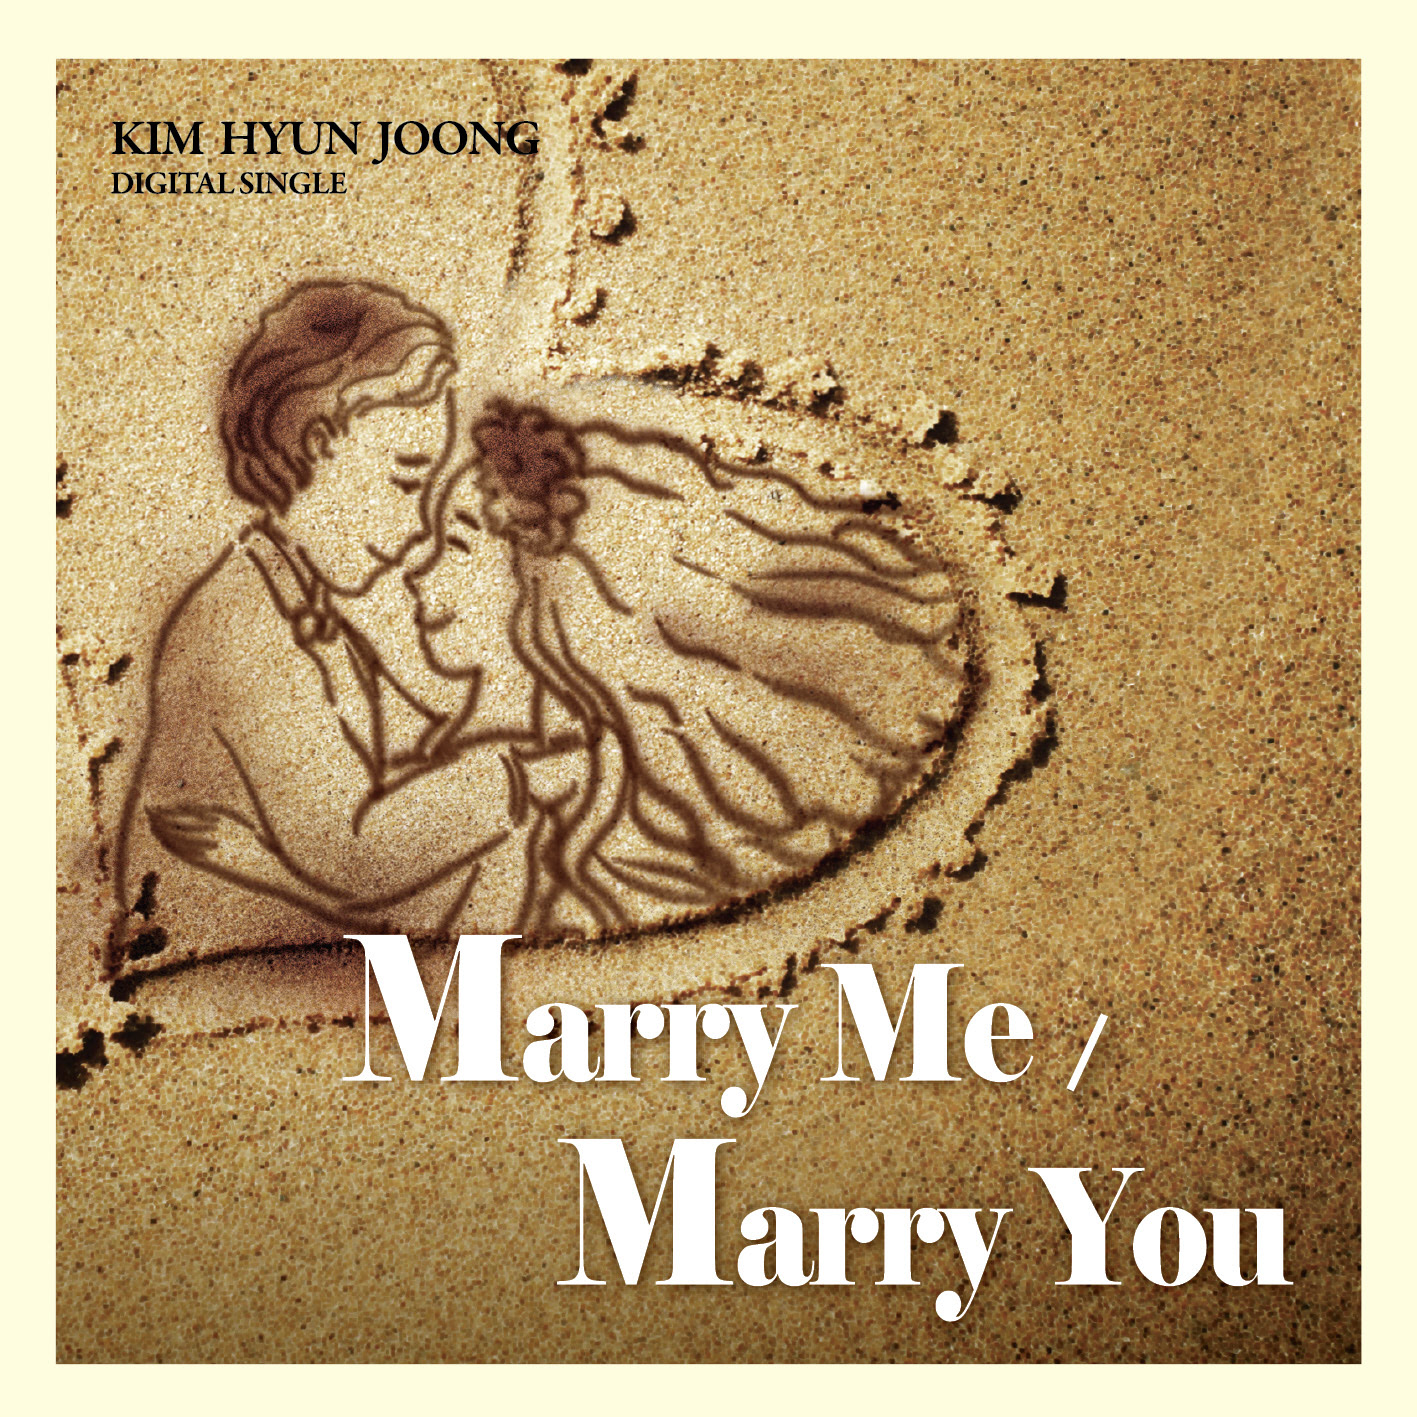 Single_Kim Hyun Joong – Marry Me - Marry You